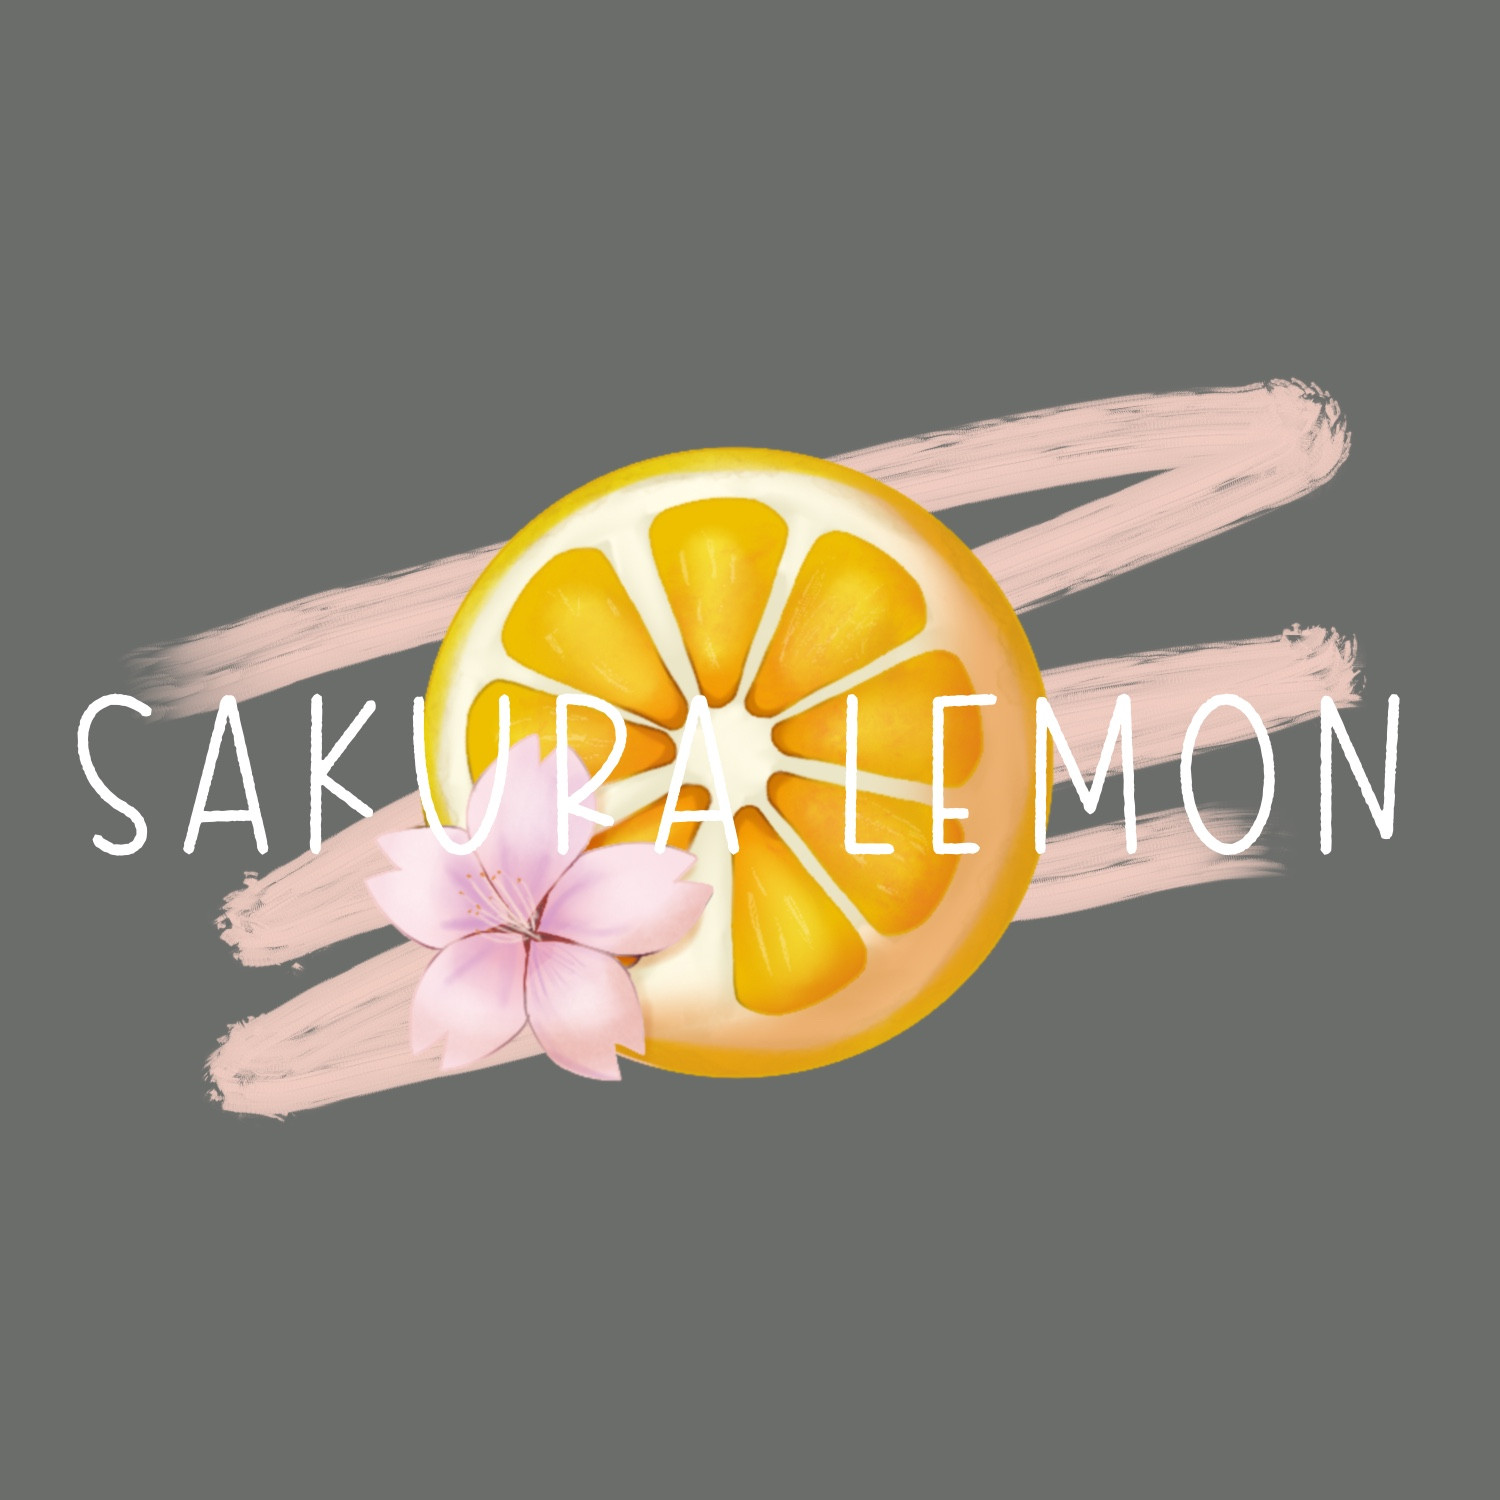 Sakura Lemon Designs's profile picture